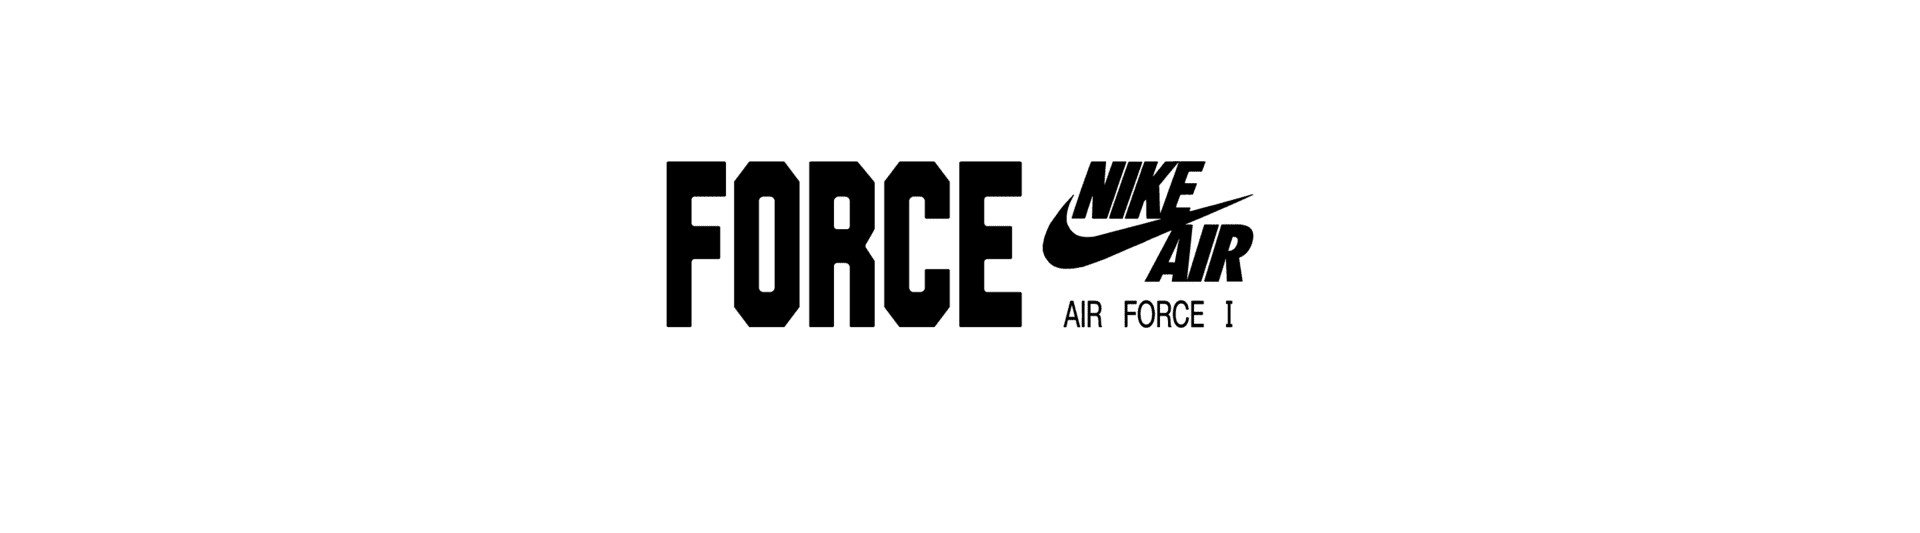 Nike NBA x Air Force 1 High '07 LV8 'White' CT2306-100 - KICKS CREW